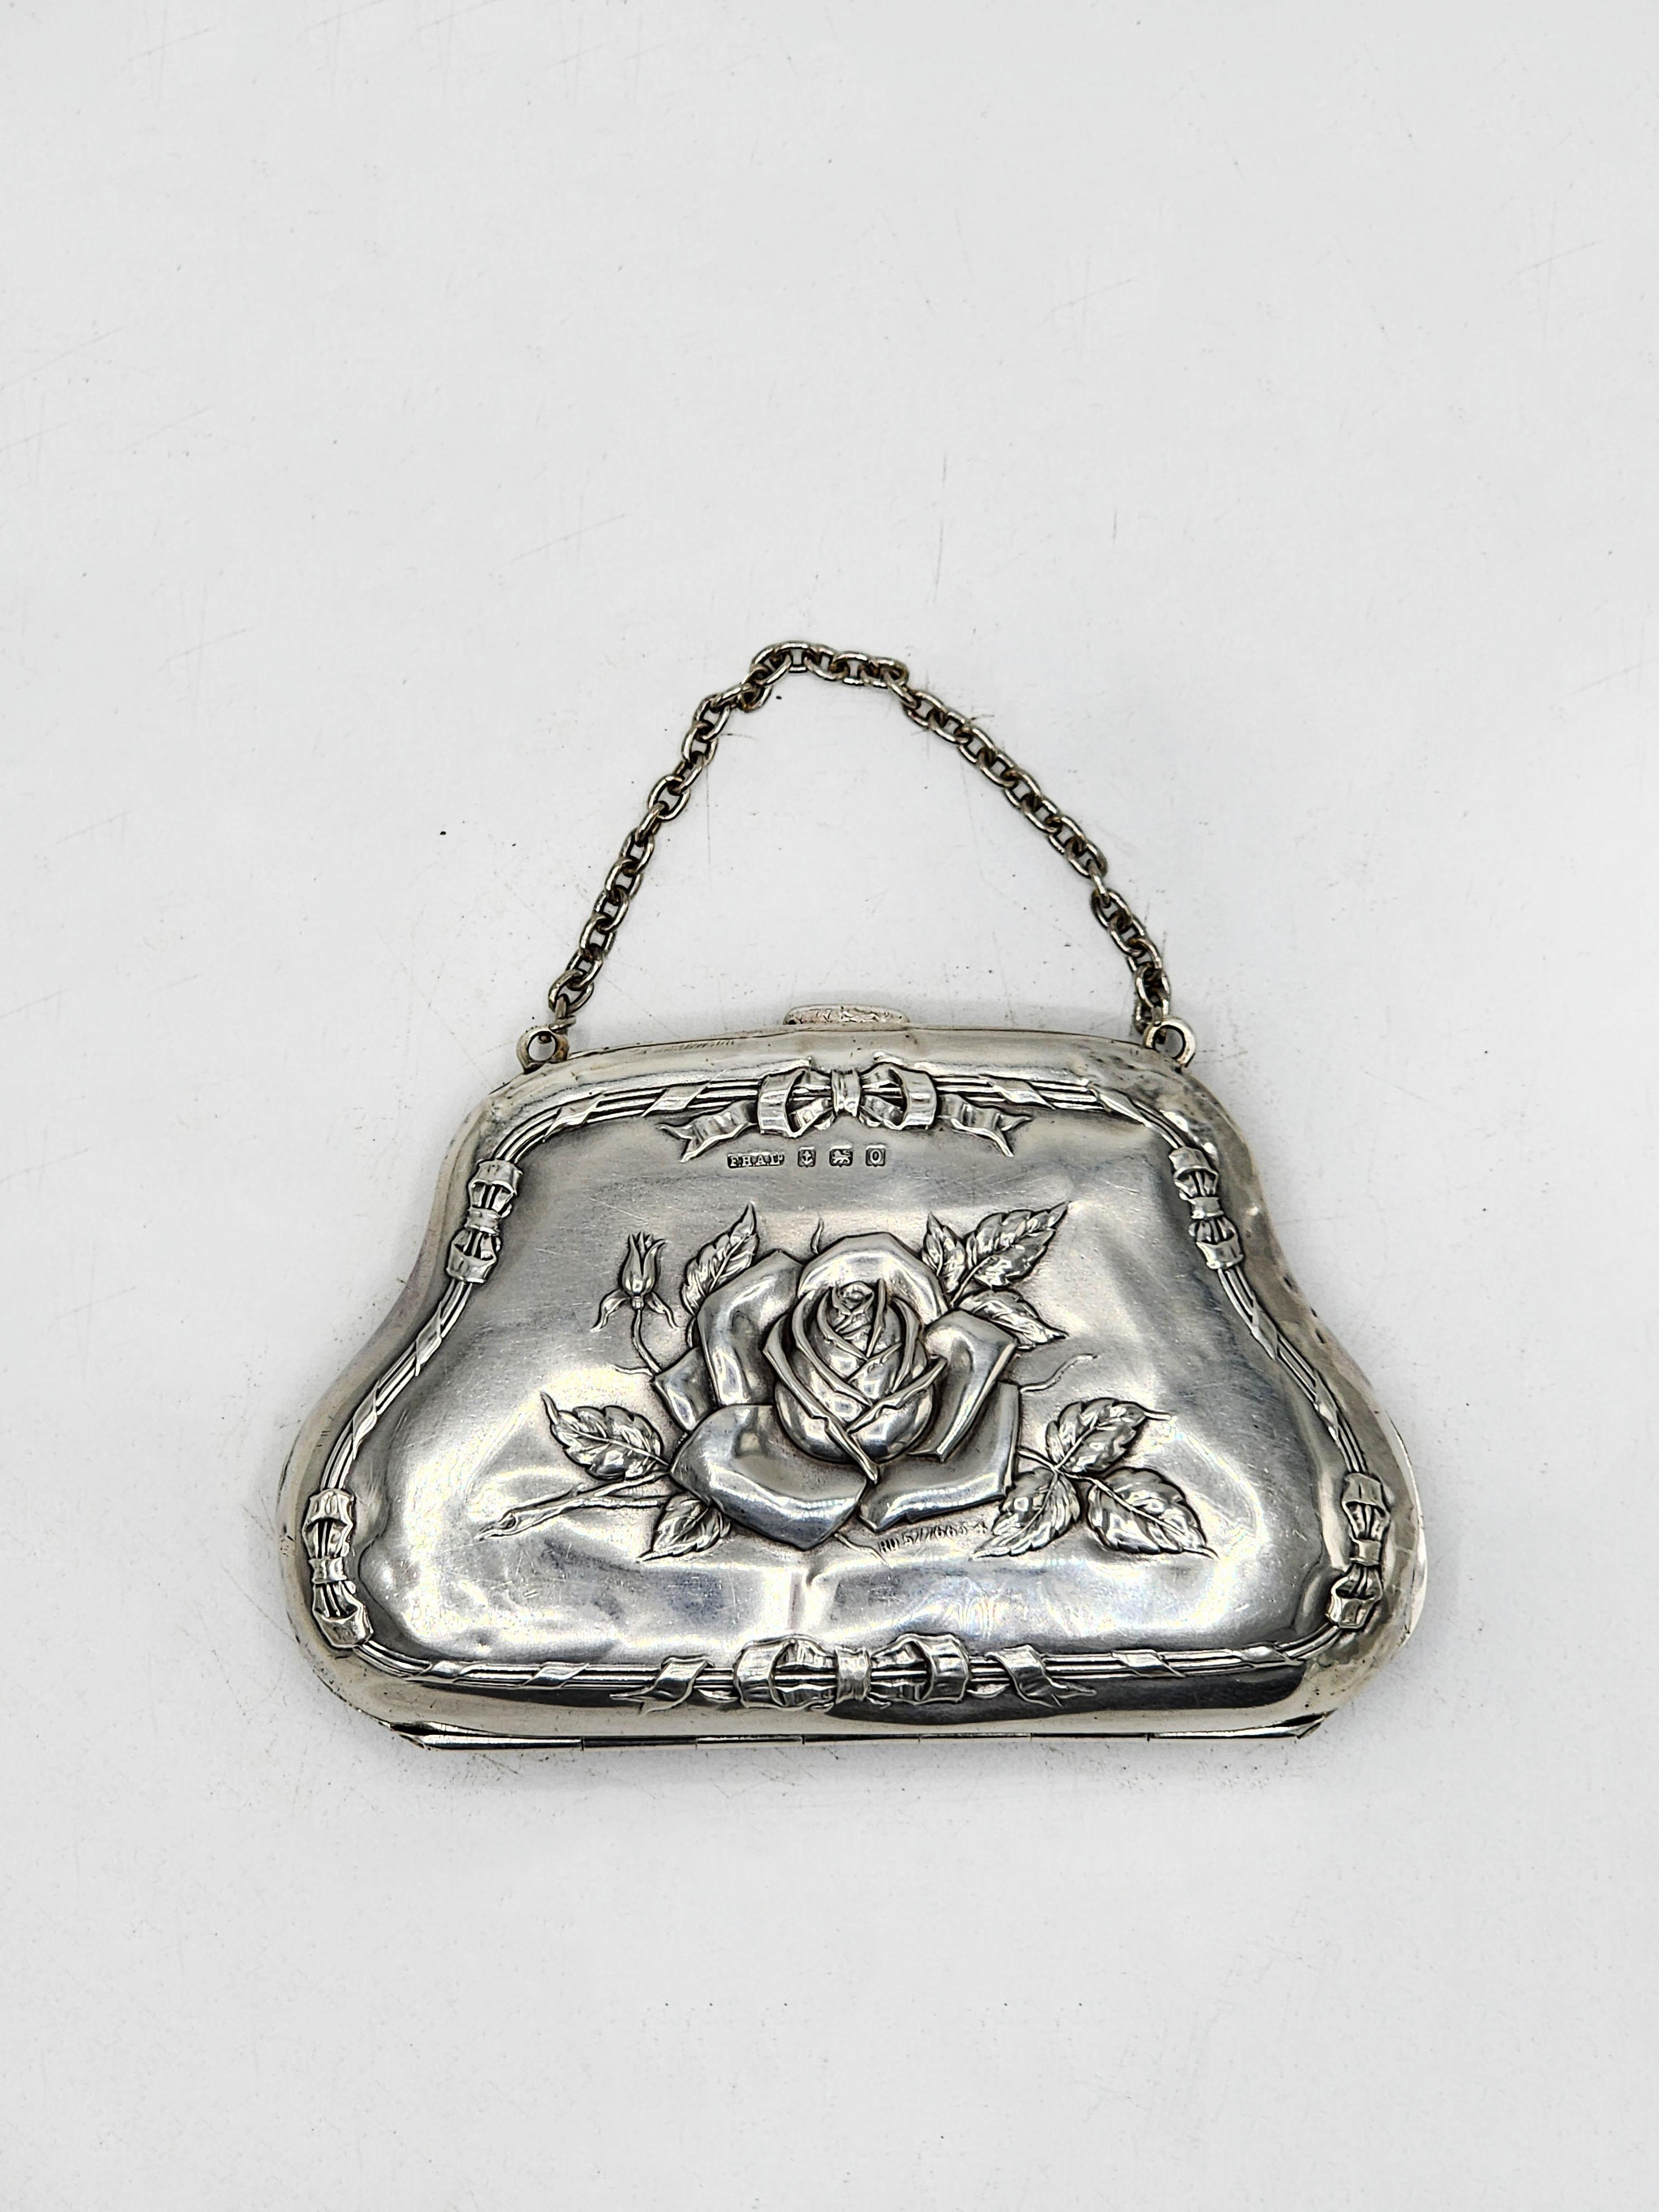 20th Century 20th century sterling silver handbag-shaped box For Sale